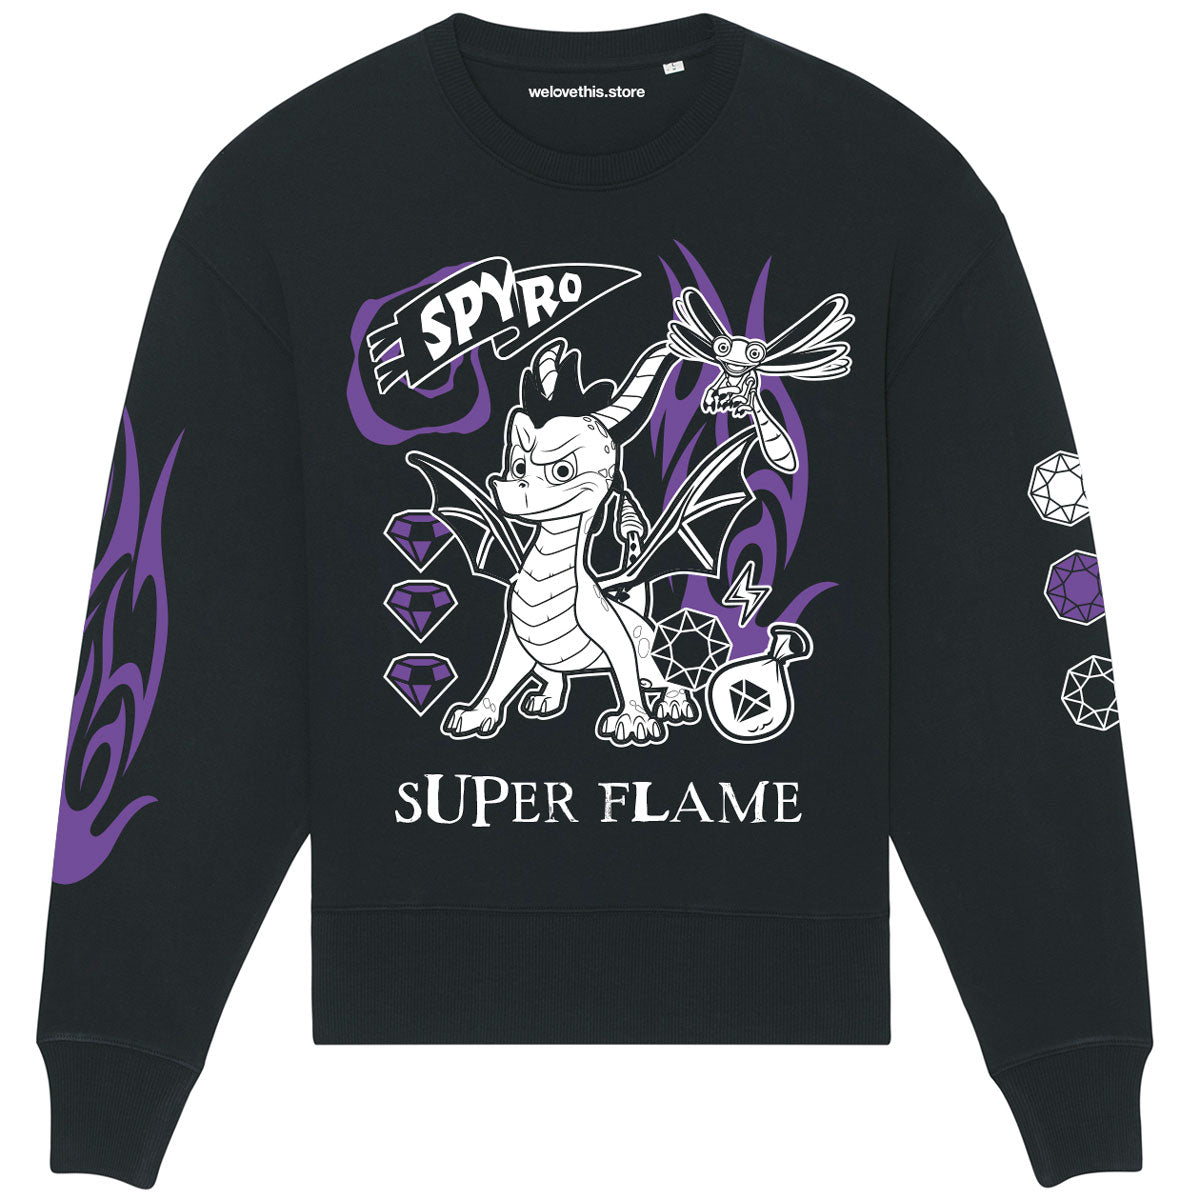 Spyro Super Flame Sweatshirt with Sleeve Prints 